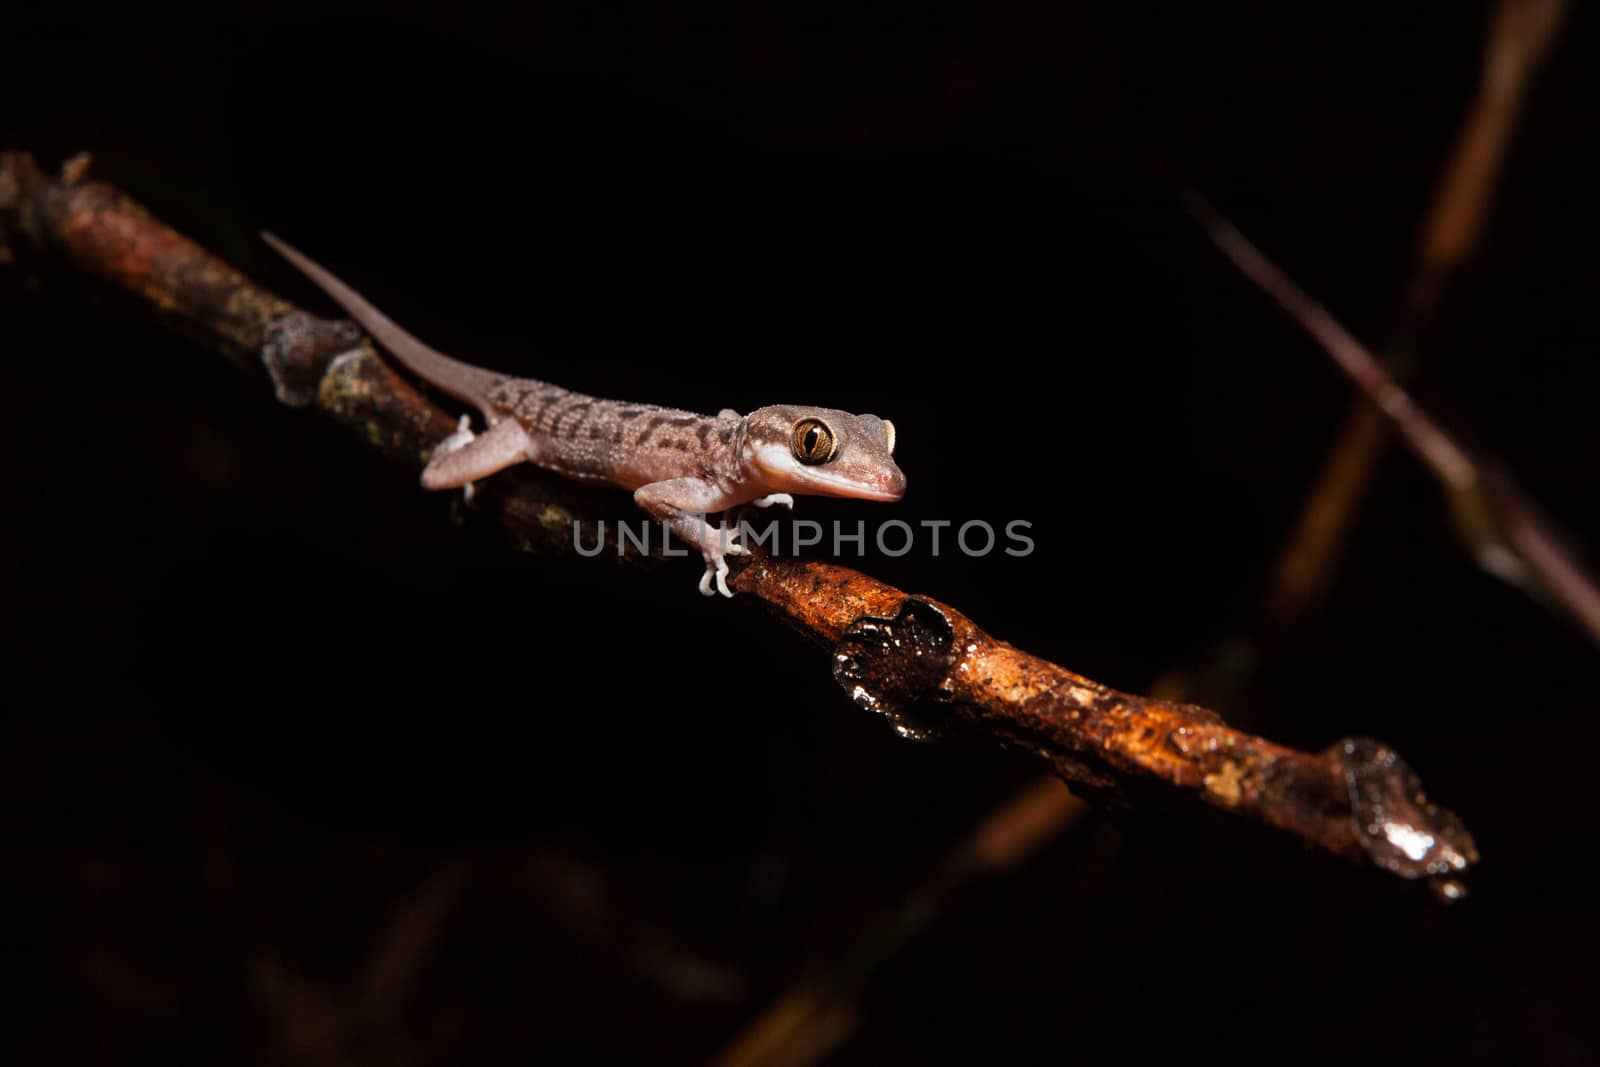 Gecko on a branch at night by juhku